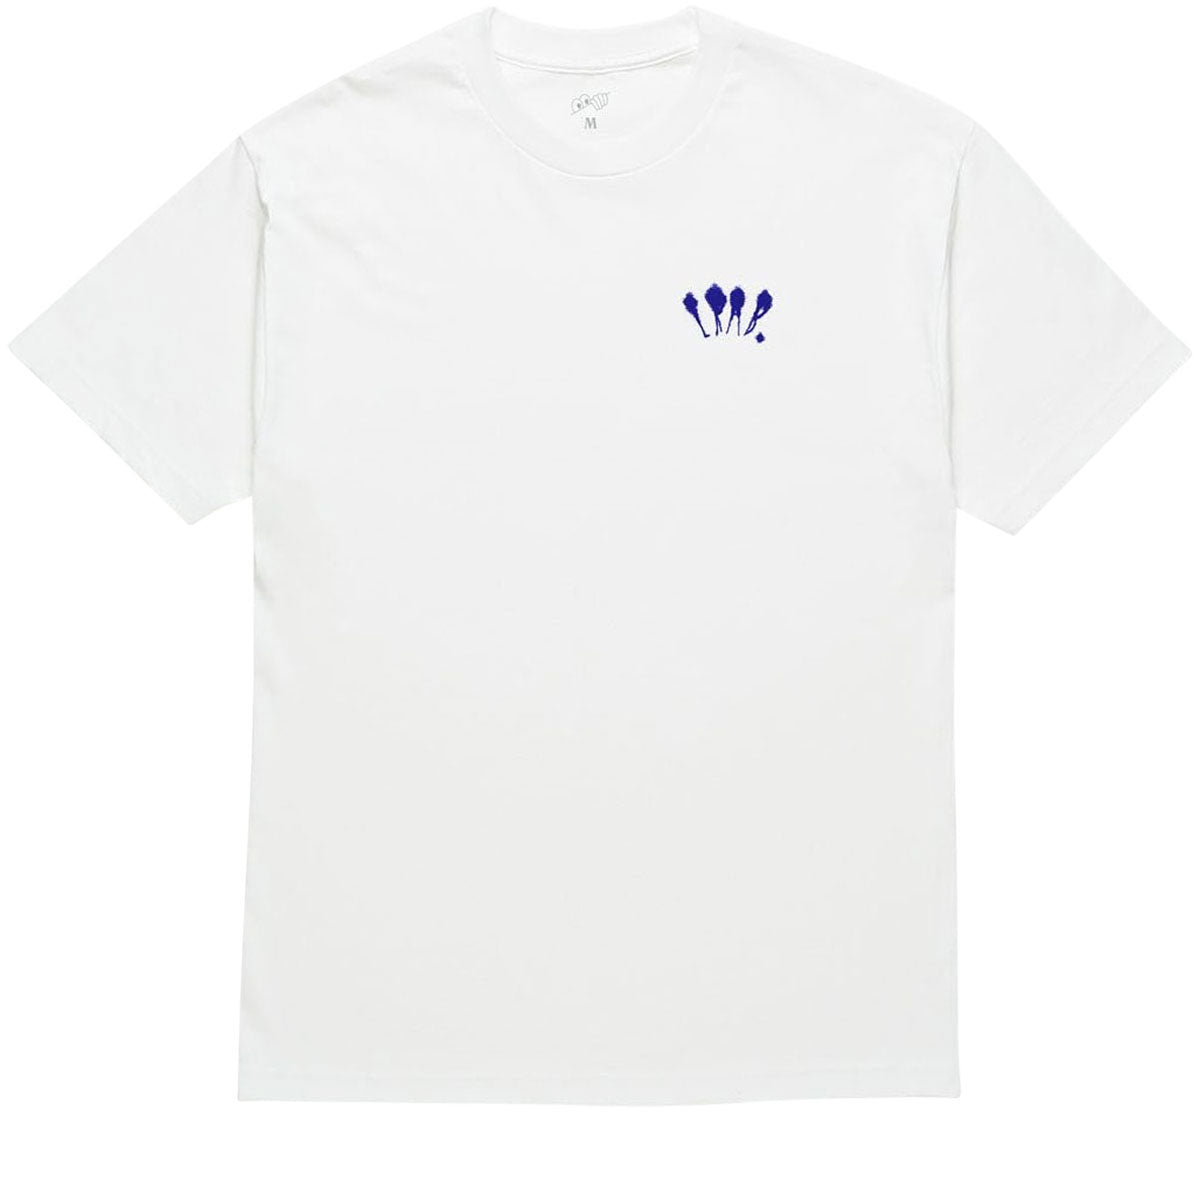 Last Resort AB BF Vanish T-Shirt - White/Blue image 2